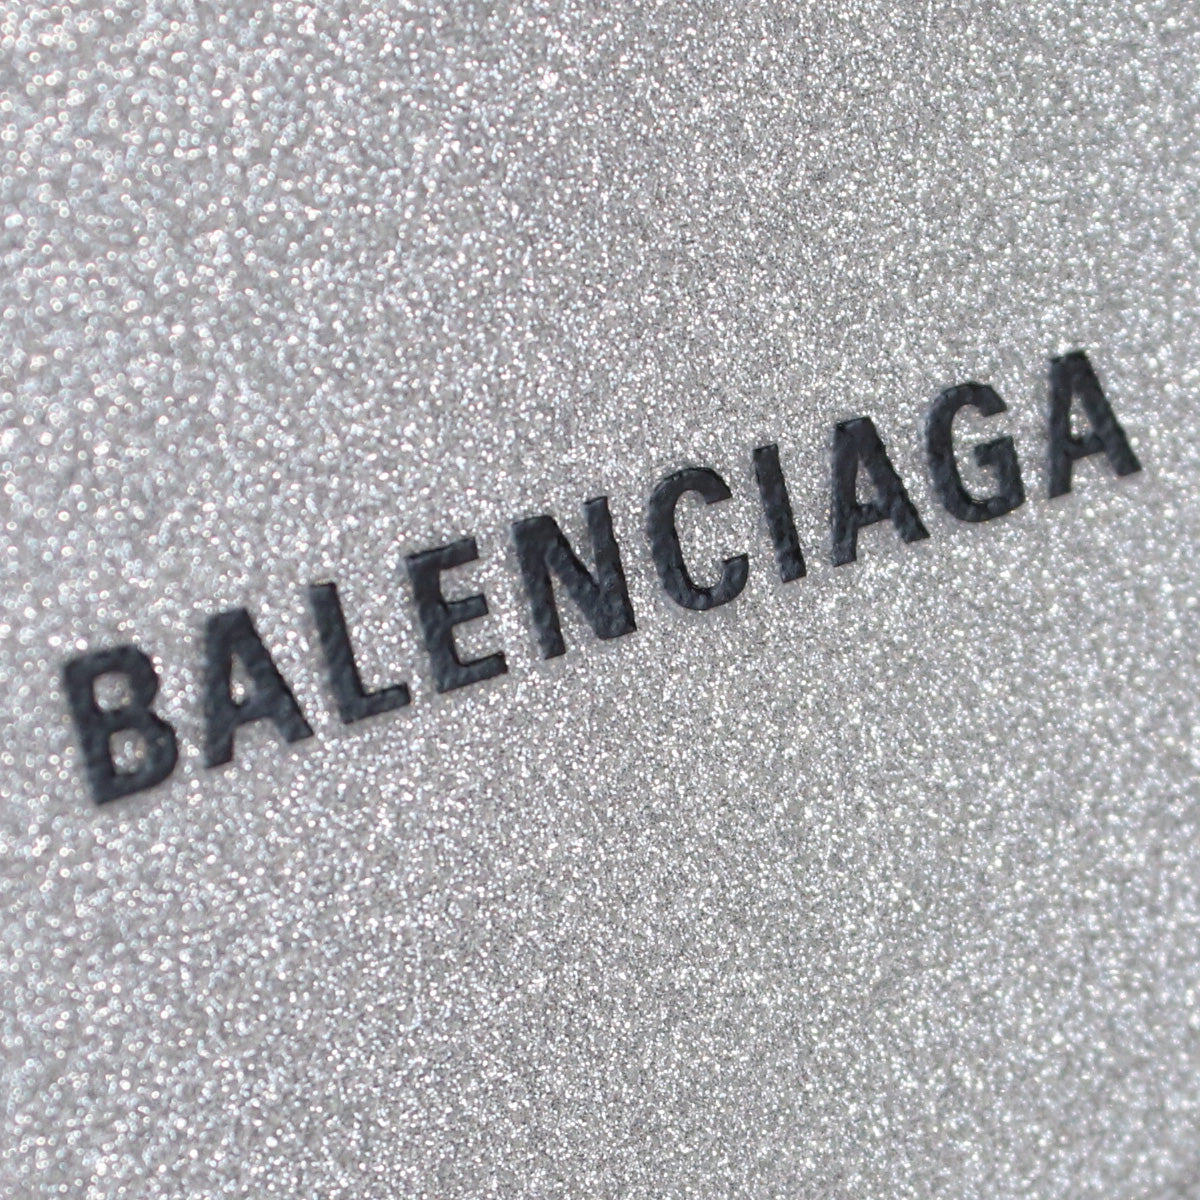 BALENCIAGA バレンシアガ 640537 6連キーケース シルバー系 メンズ